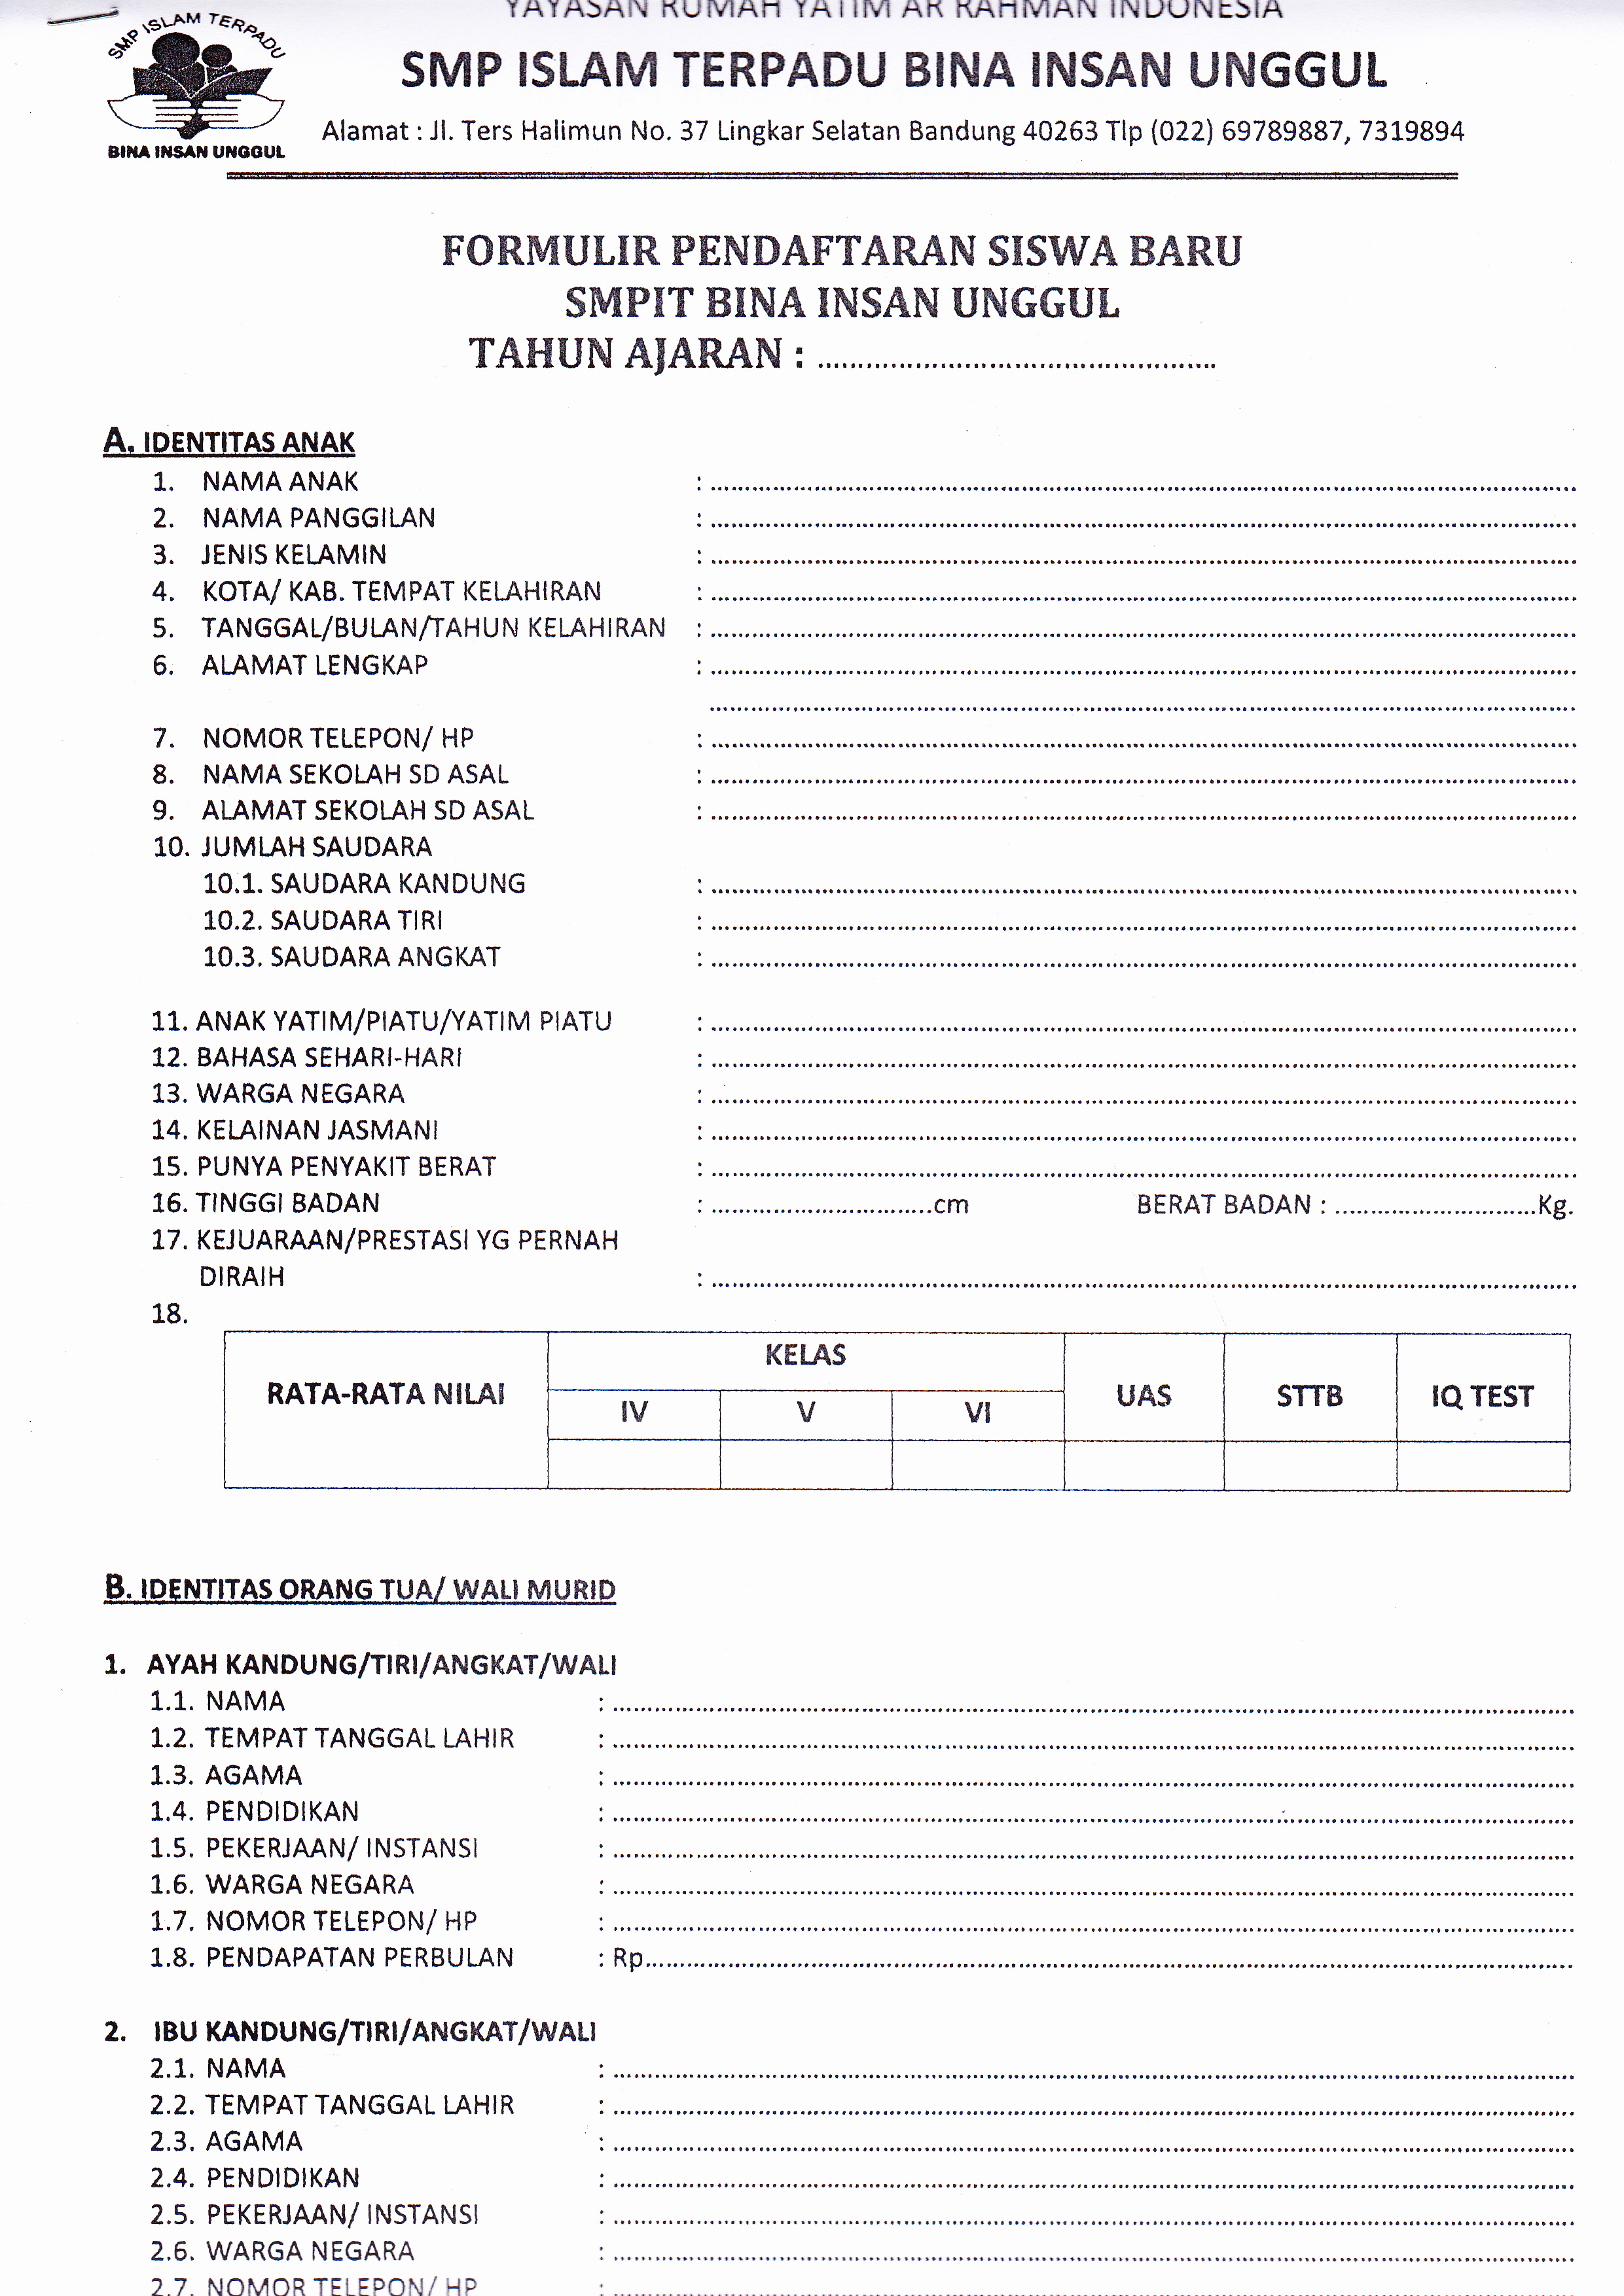 pendaftaran taekwondo formulir Contoh Contoh  Formulir 36  Pendaftaran